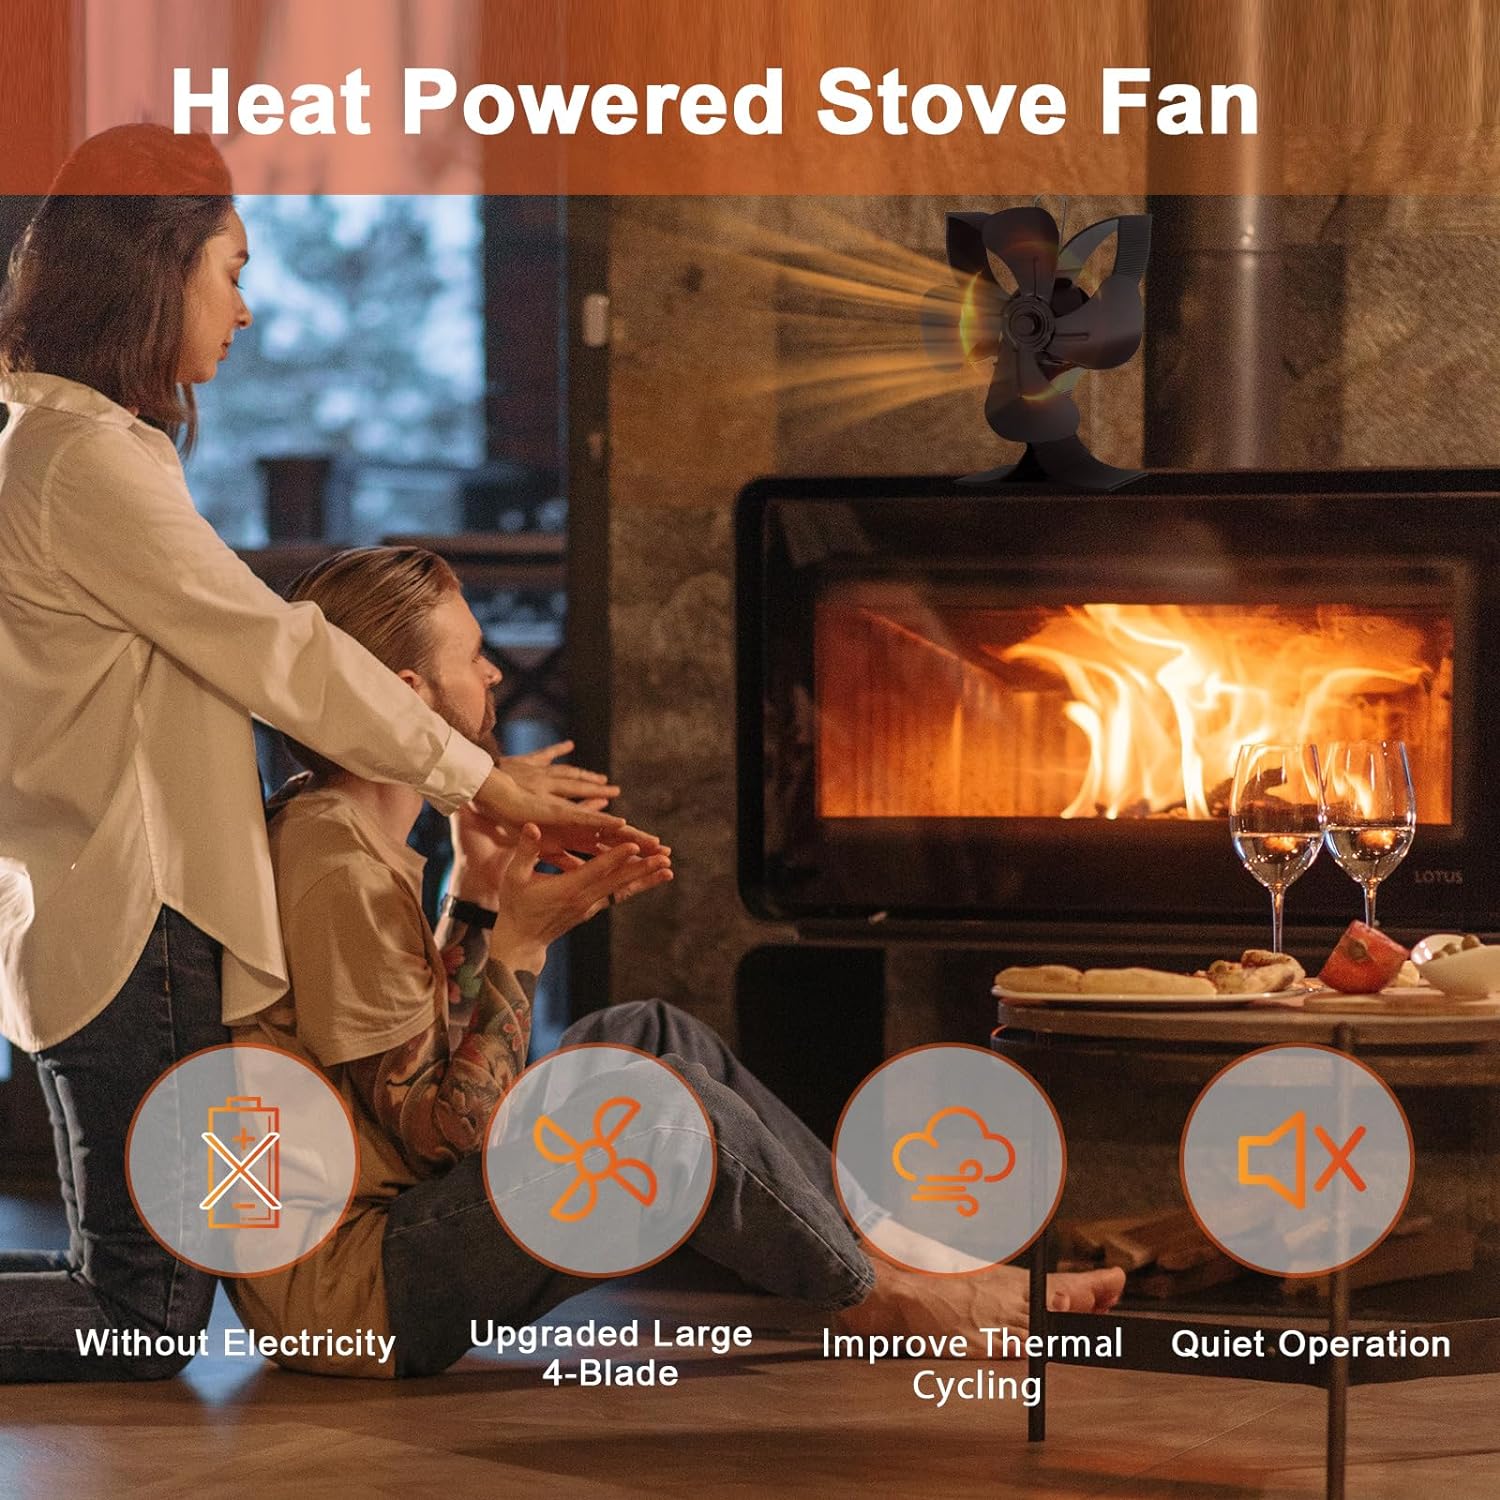 Miaton Heat Powered Wood Stove Fan Review